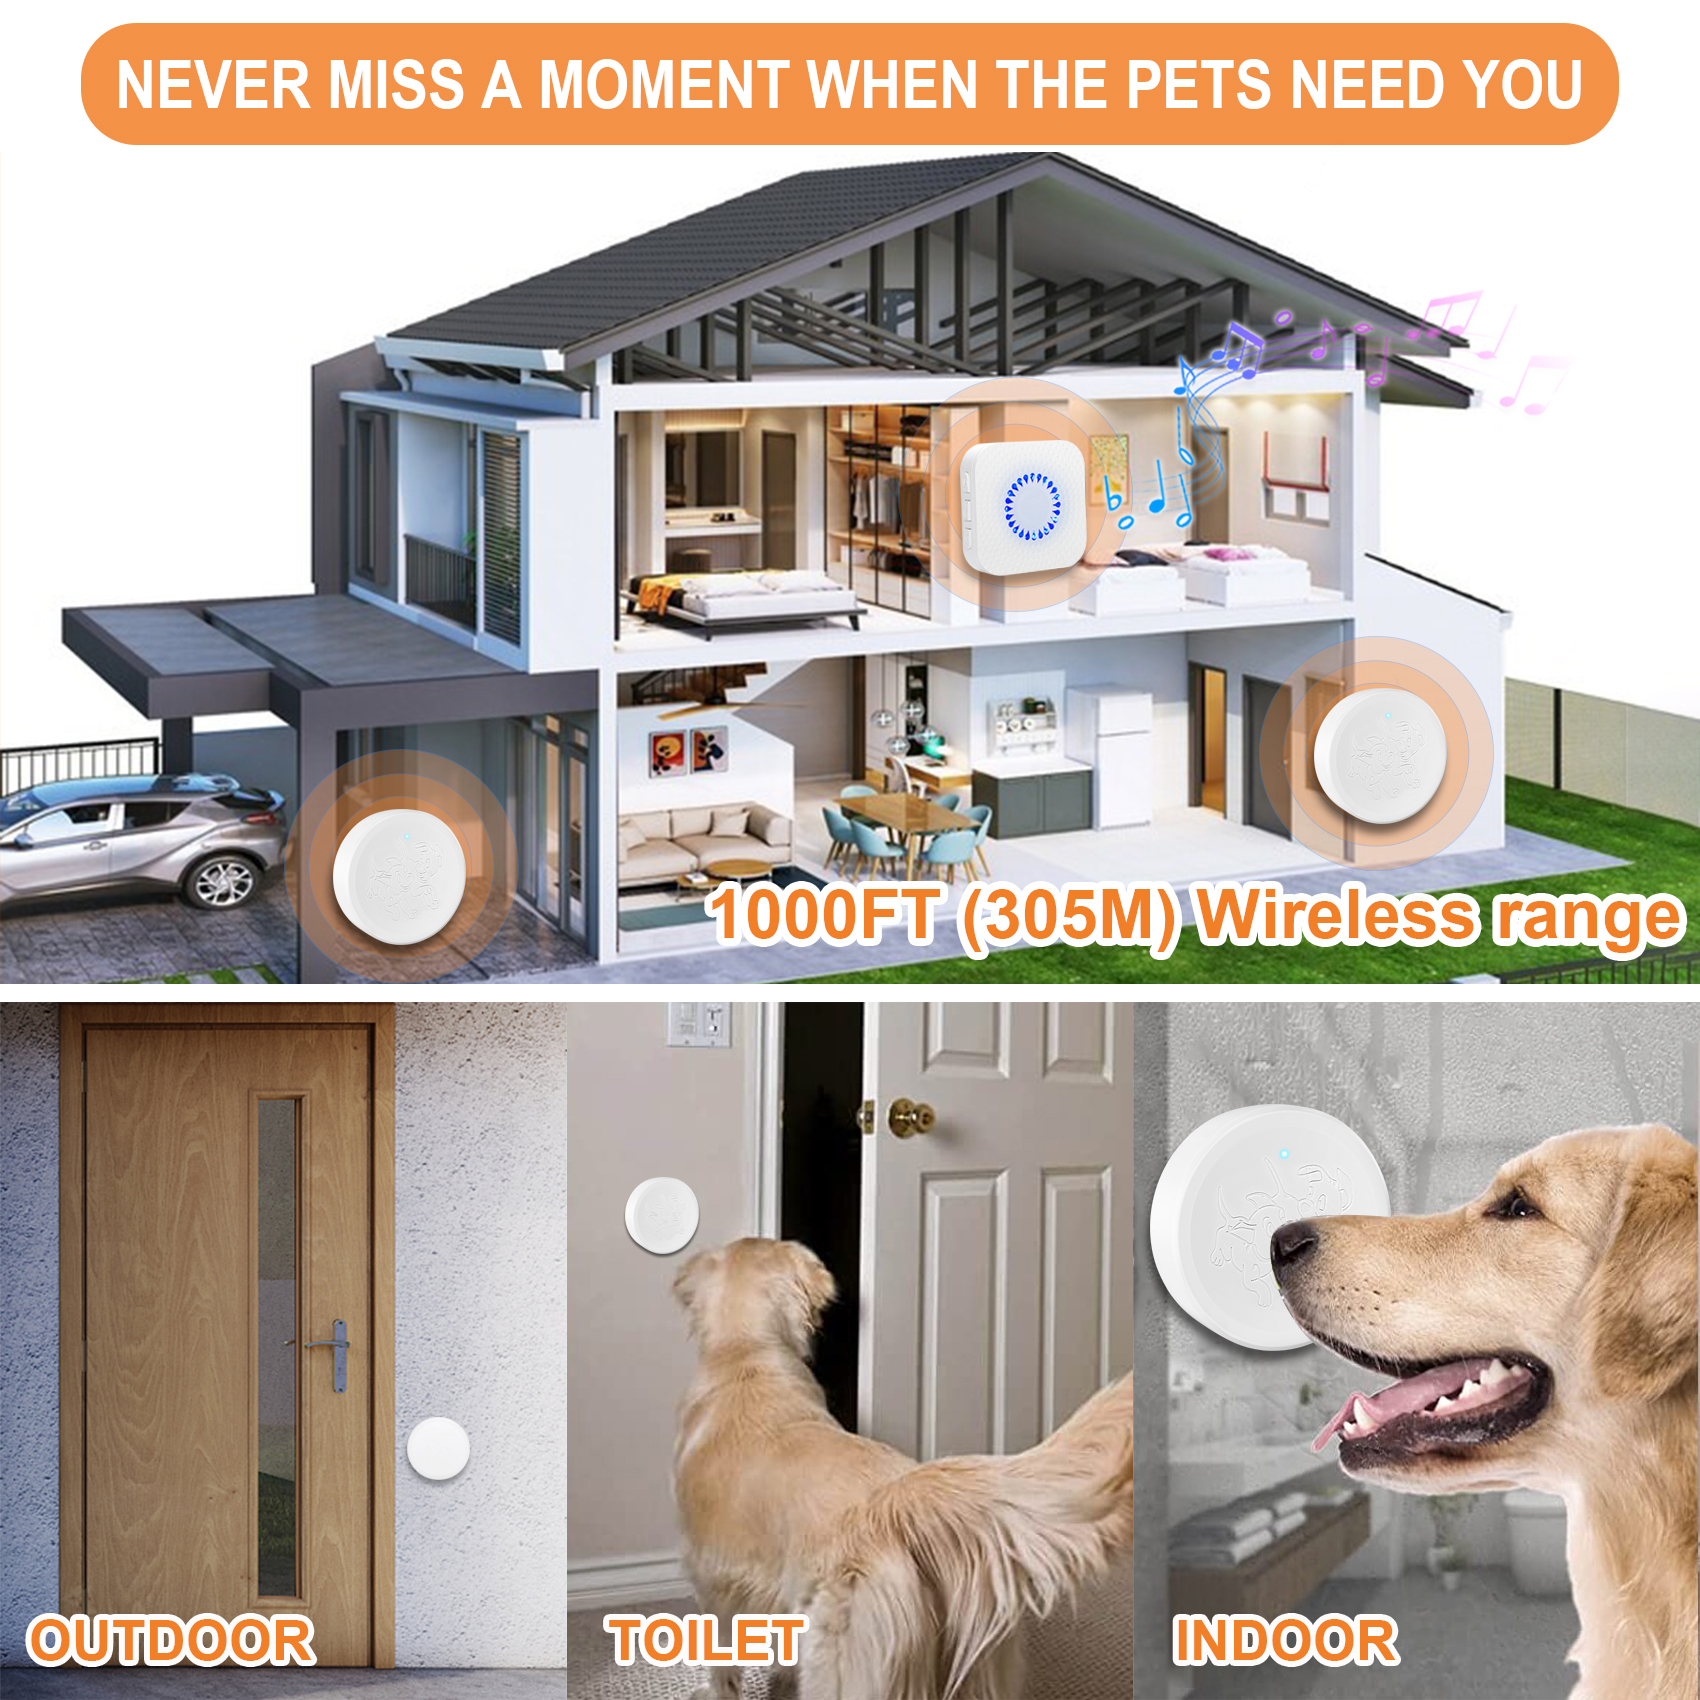 New wireless kinetic Waterproof Pet Training Bell dog doorbell with ac receiver wireless dog doorbell